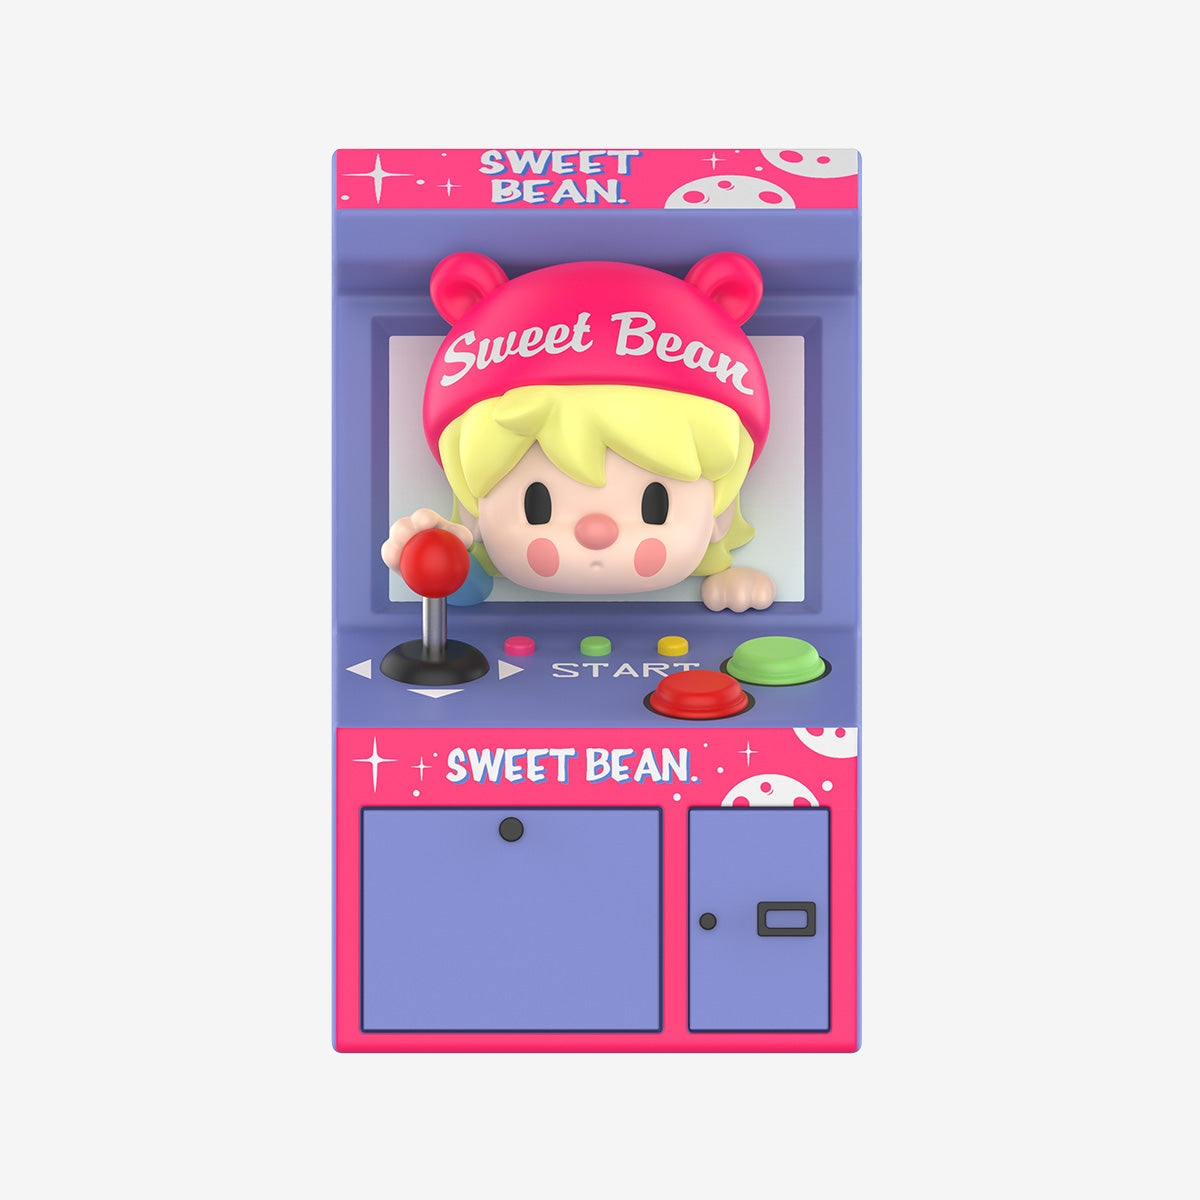 【Restock】Pop Mart Sweet Bean Akihabara Series Blind Box Figures